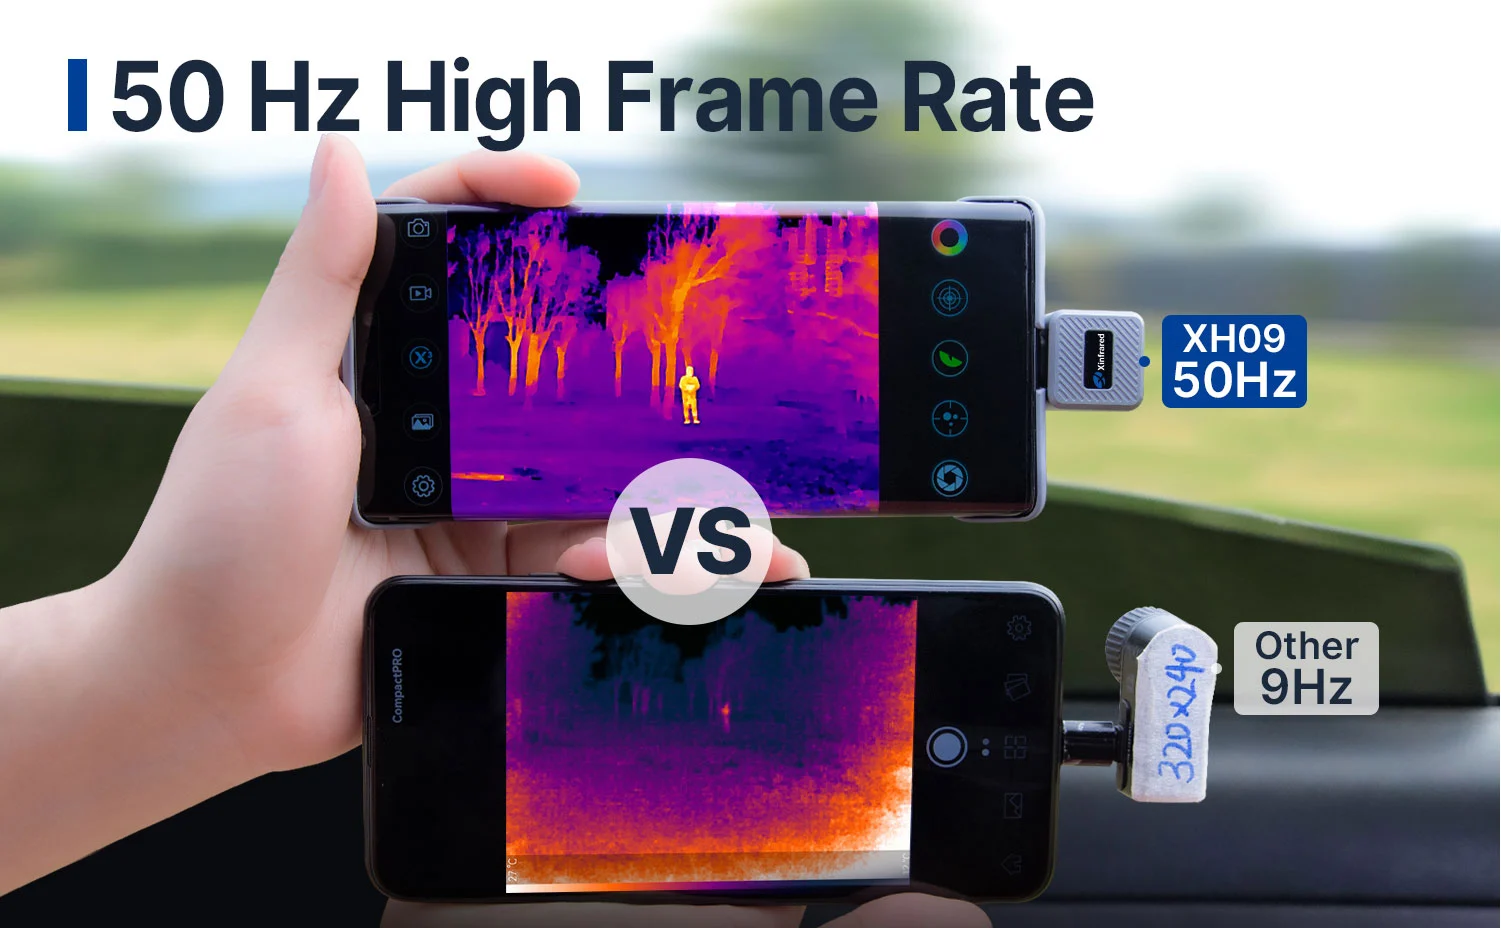 50Hz High Frame Rate